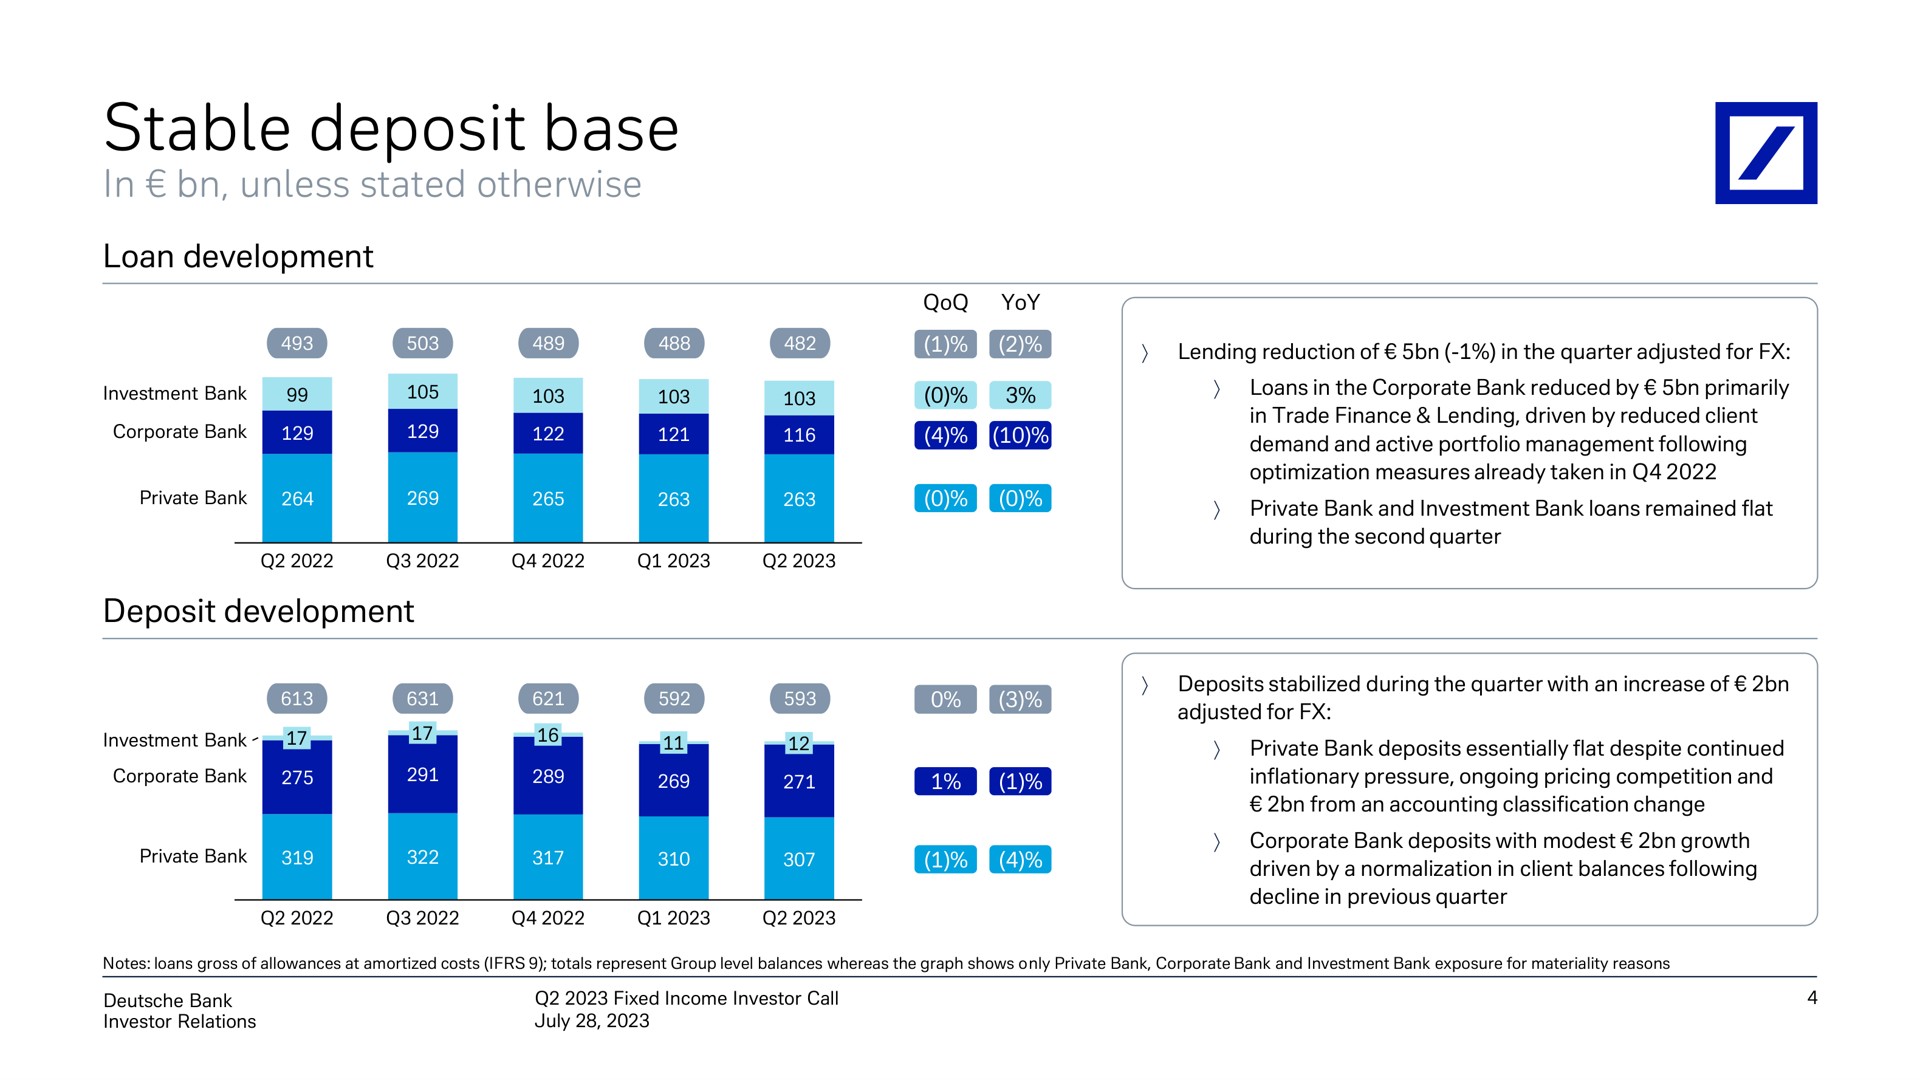 stable deposit base as adjusted for | Deutsche Bank